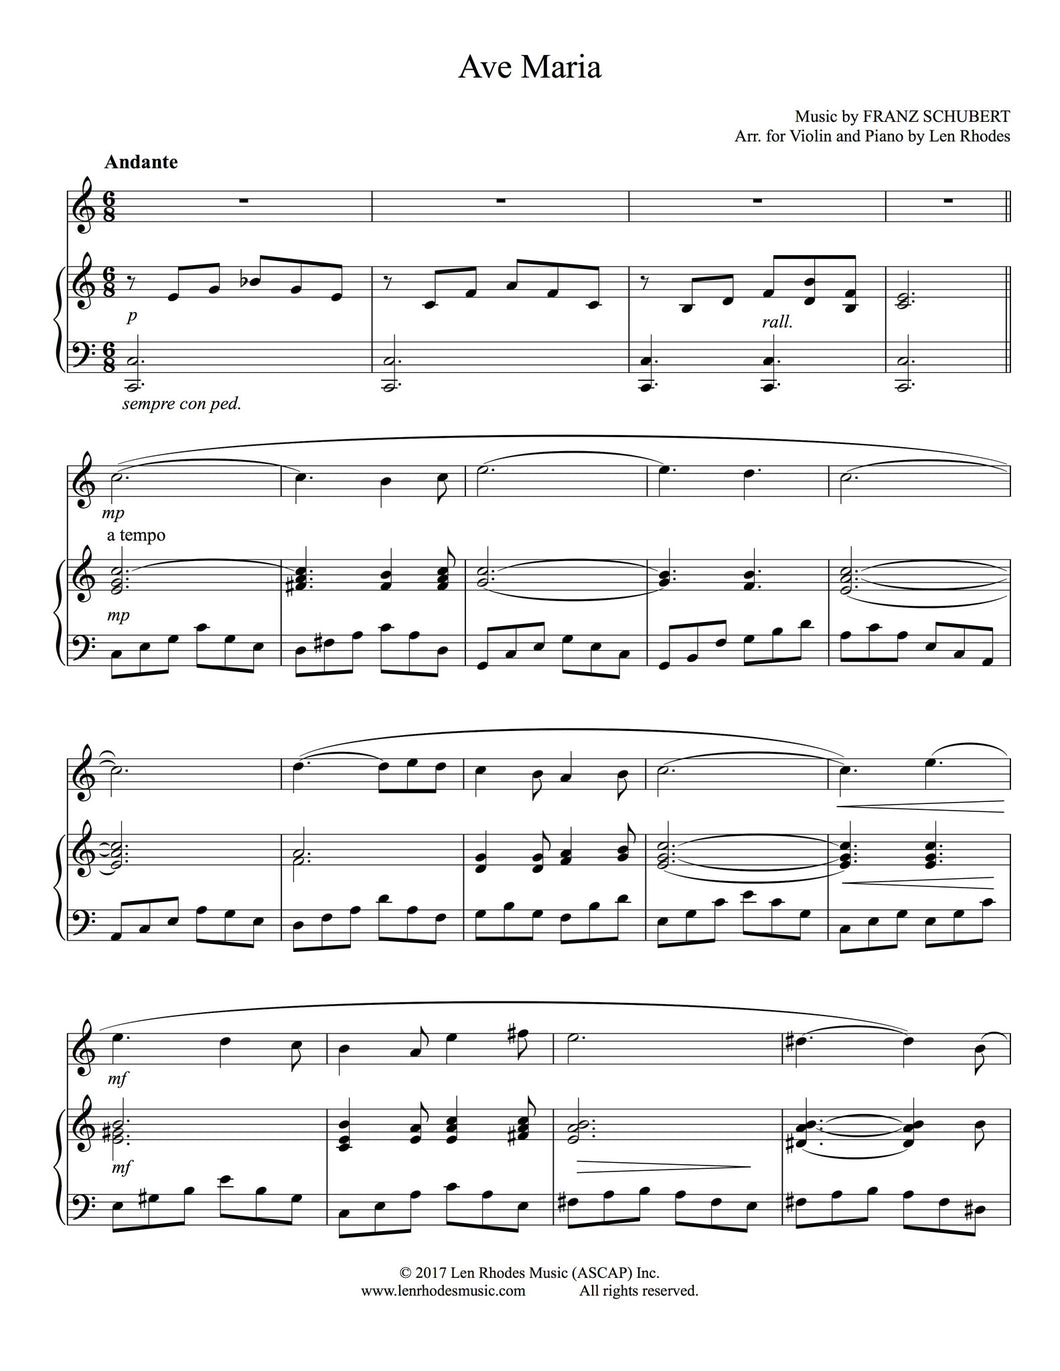 Ave Maria, Schubert - Violin and Piano